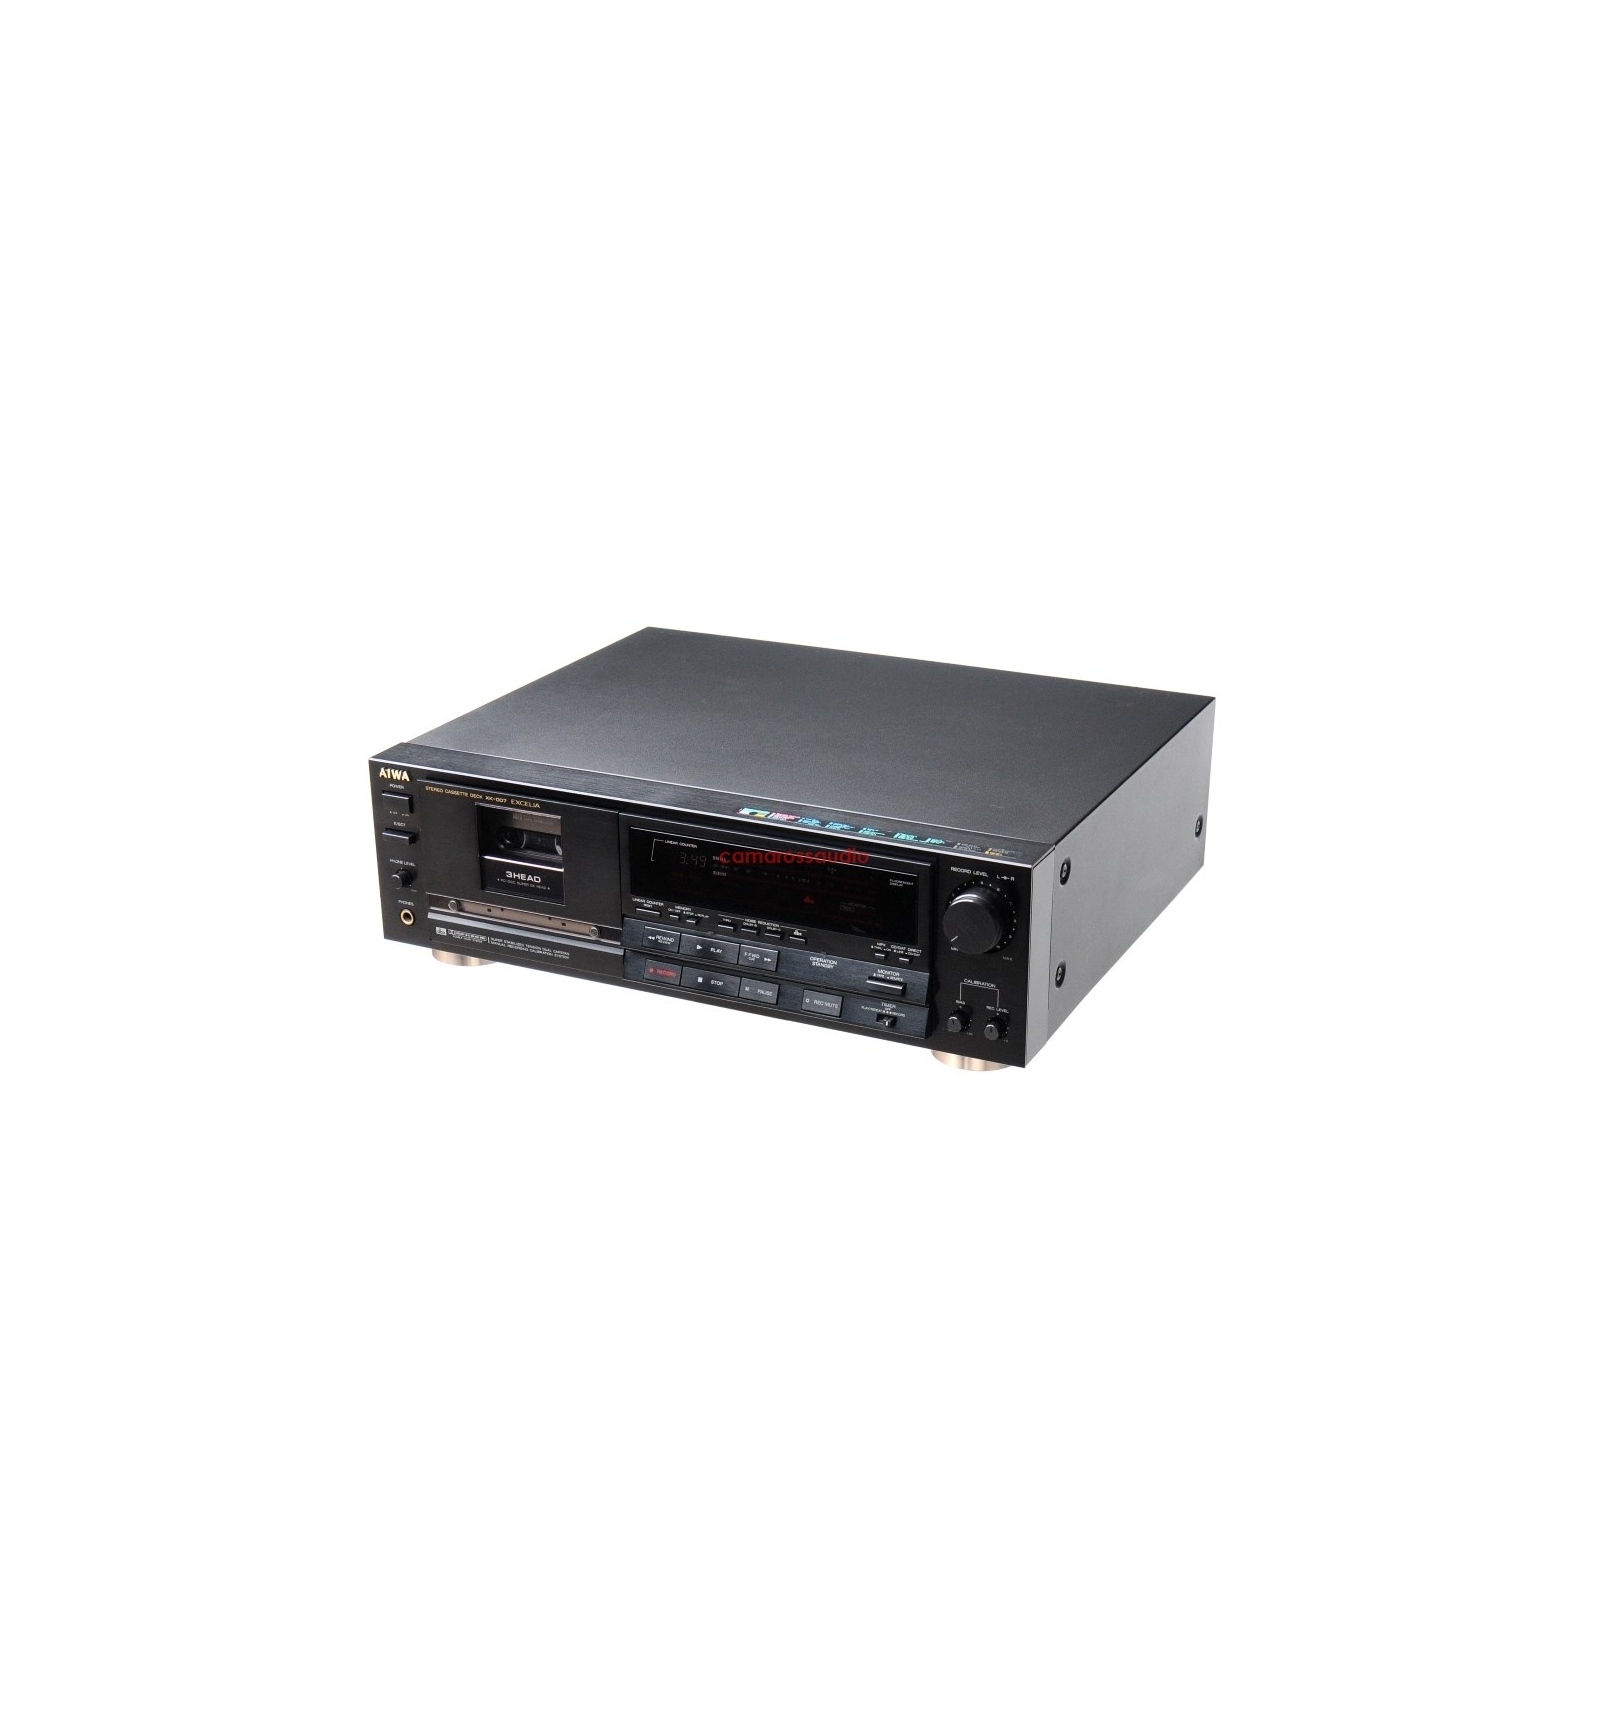 EXCELIA aiwa XK-007 3HADカセットデッキ 整備品 - オーディオ機器